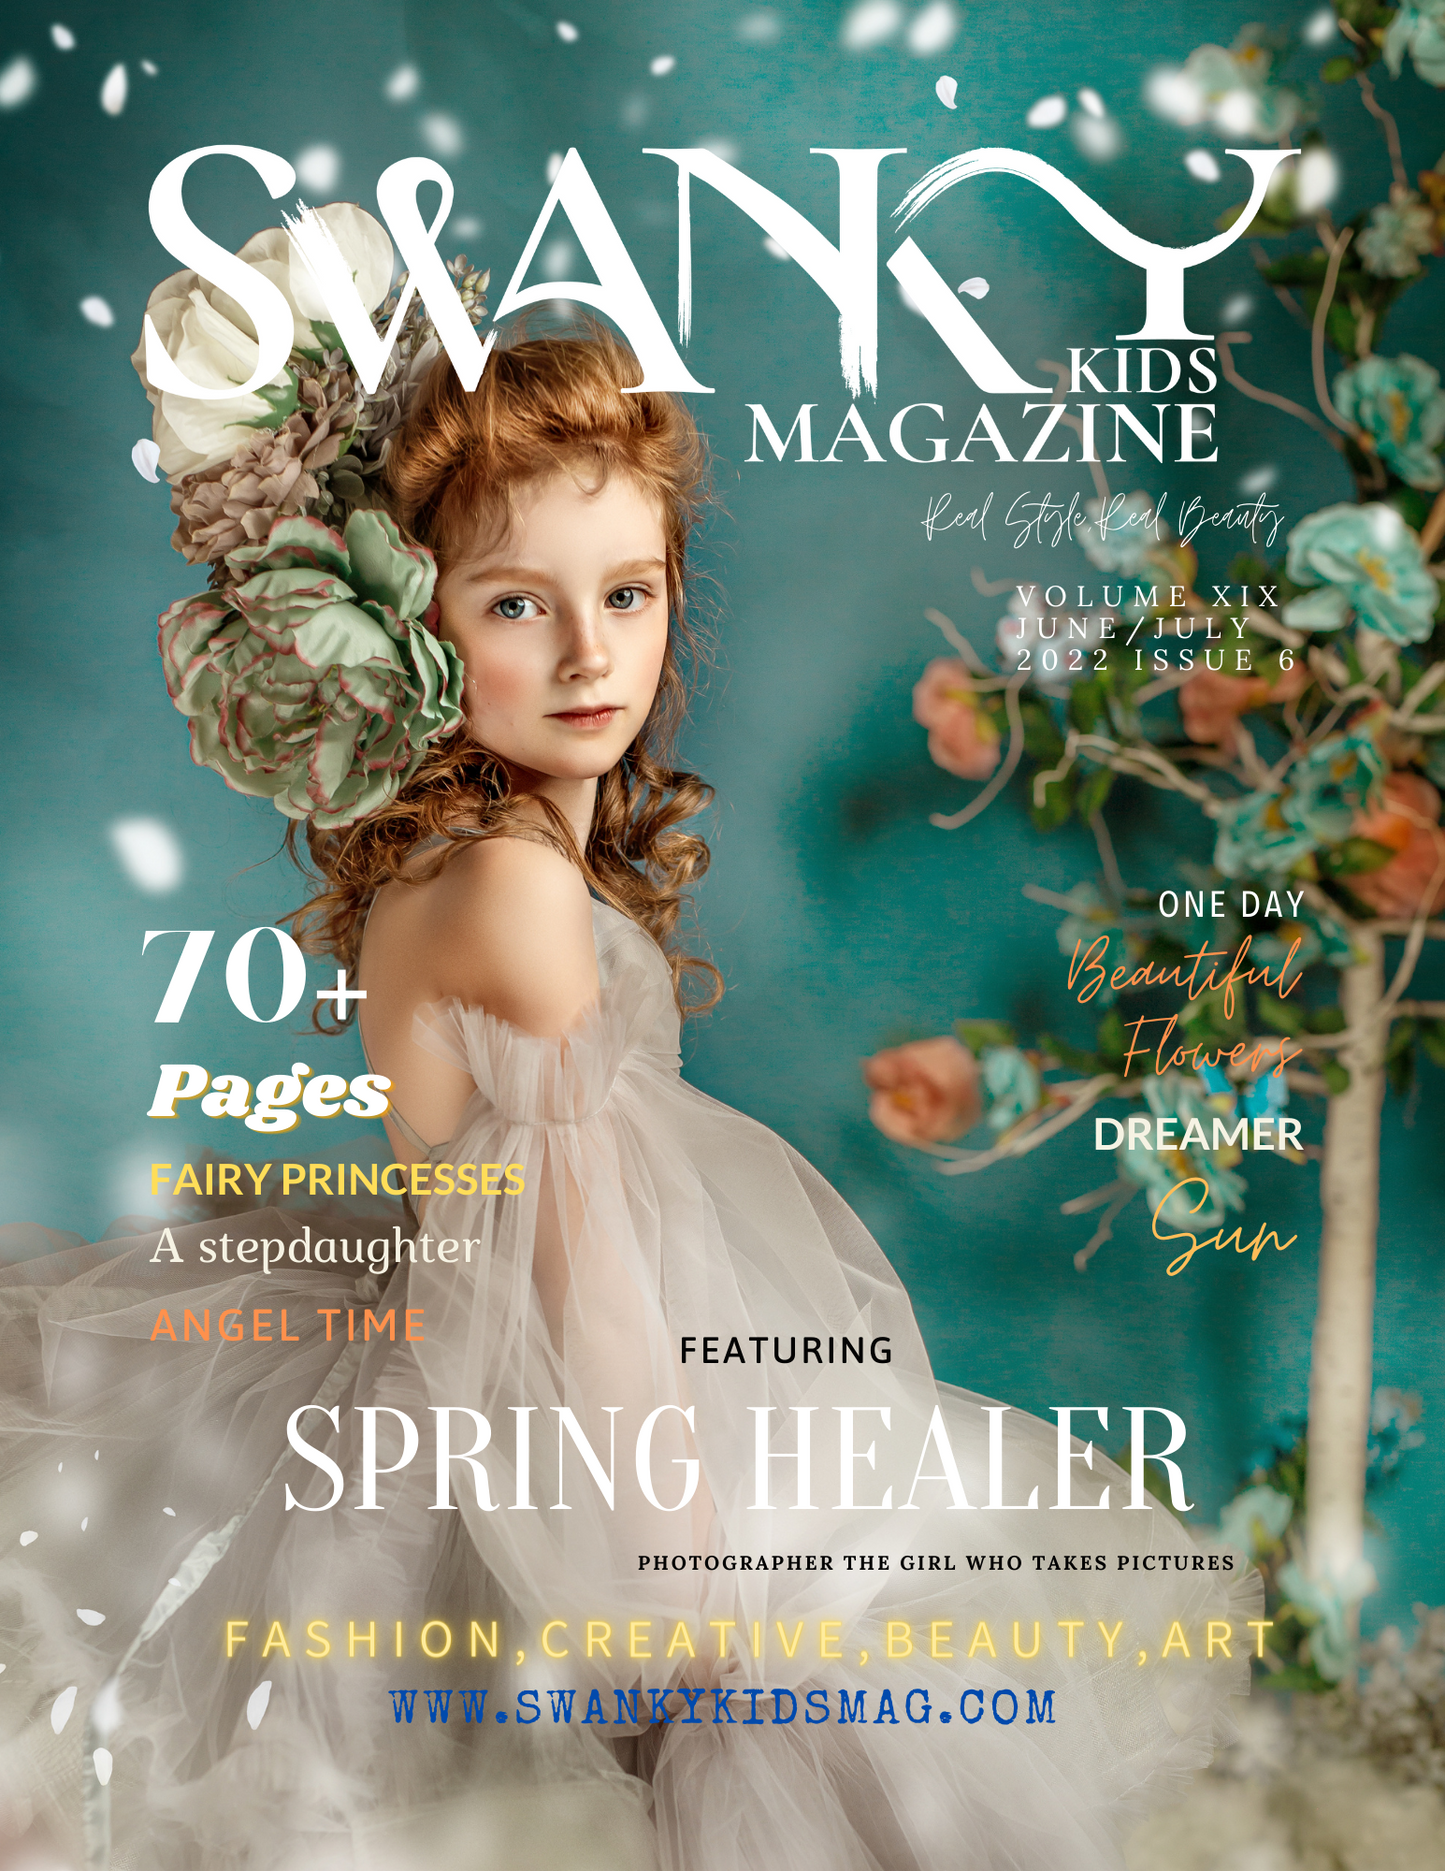 Swanky Kids Magazine JUNE 2022 VOL XIX Issue 6